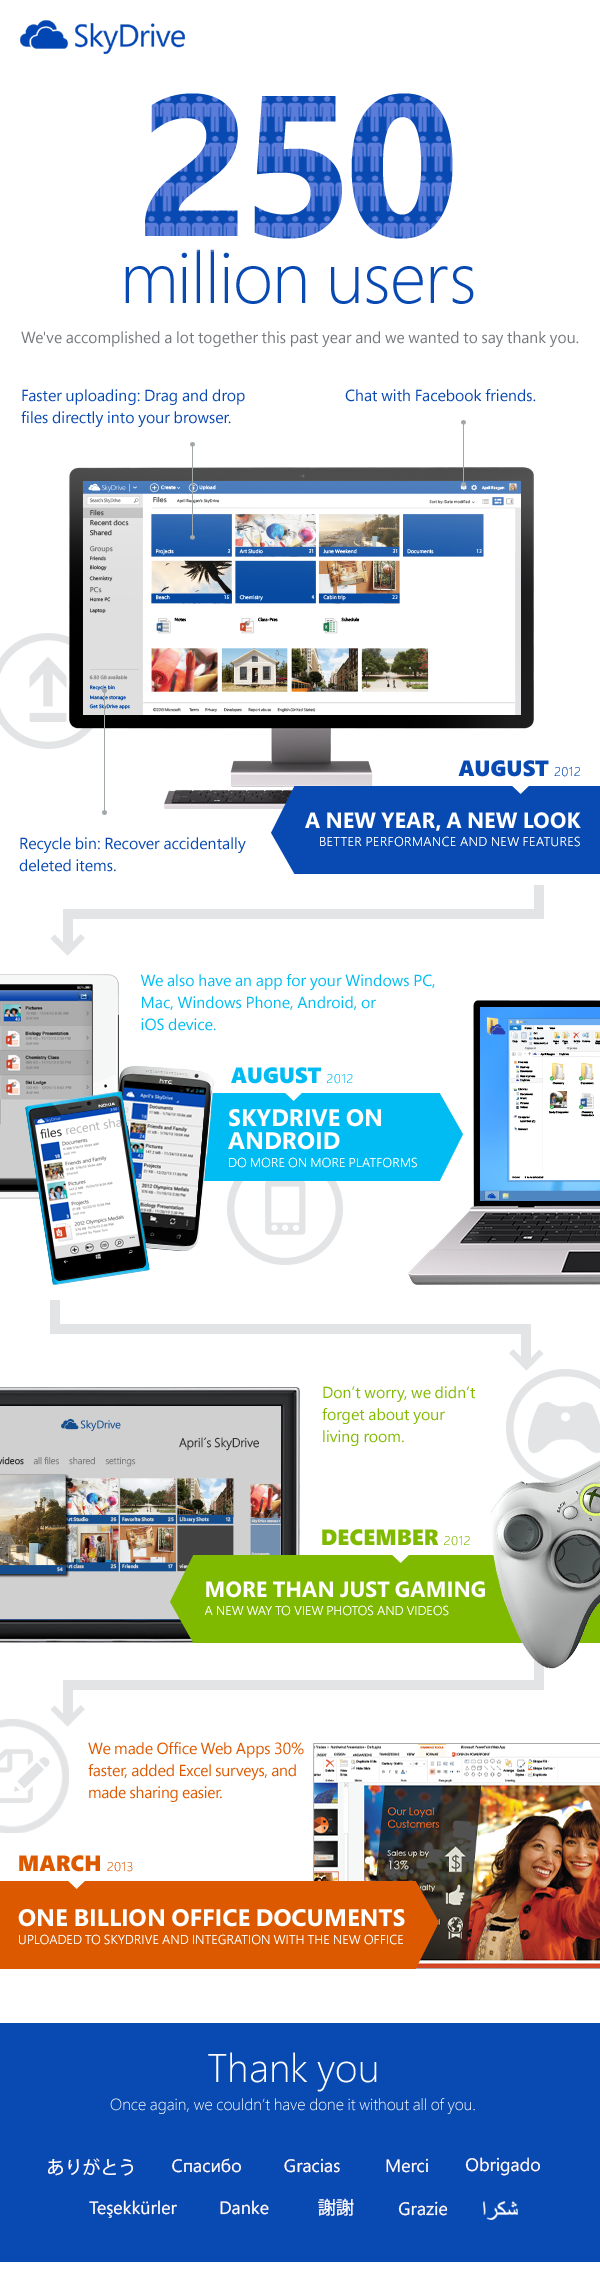 SkyDrive με 250 εκ. χρήστες καθημερινά στο cloud της Microsoft